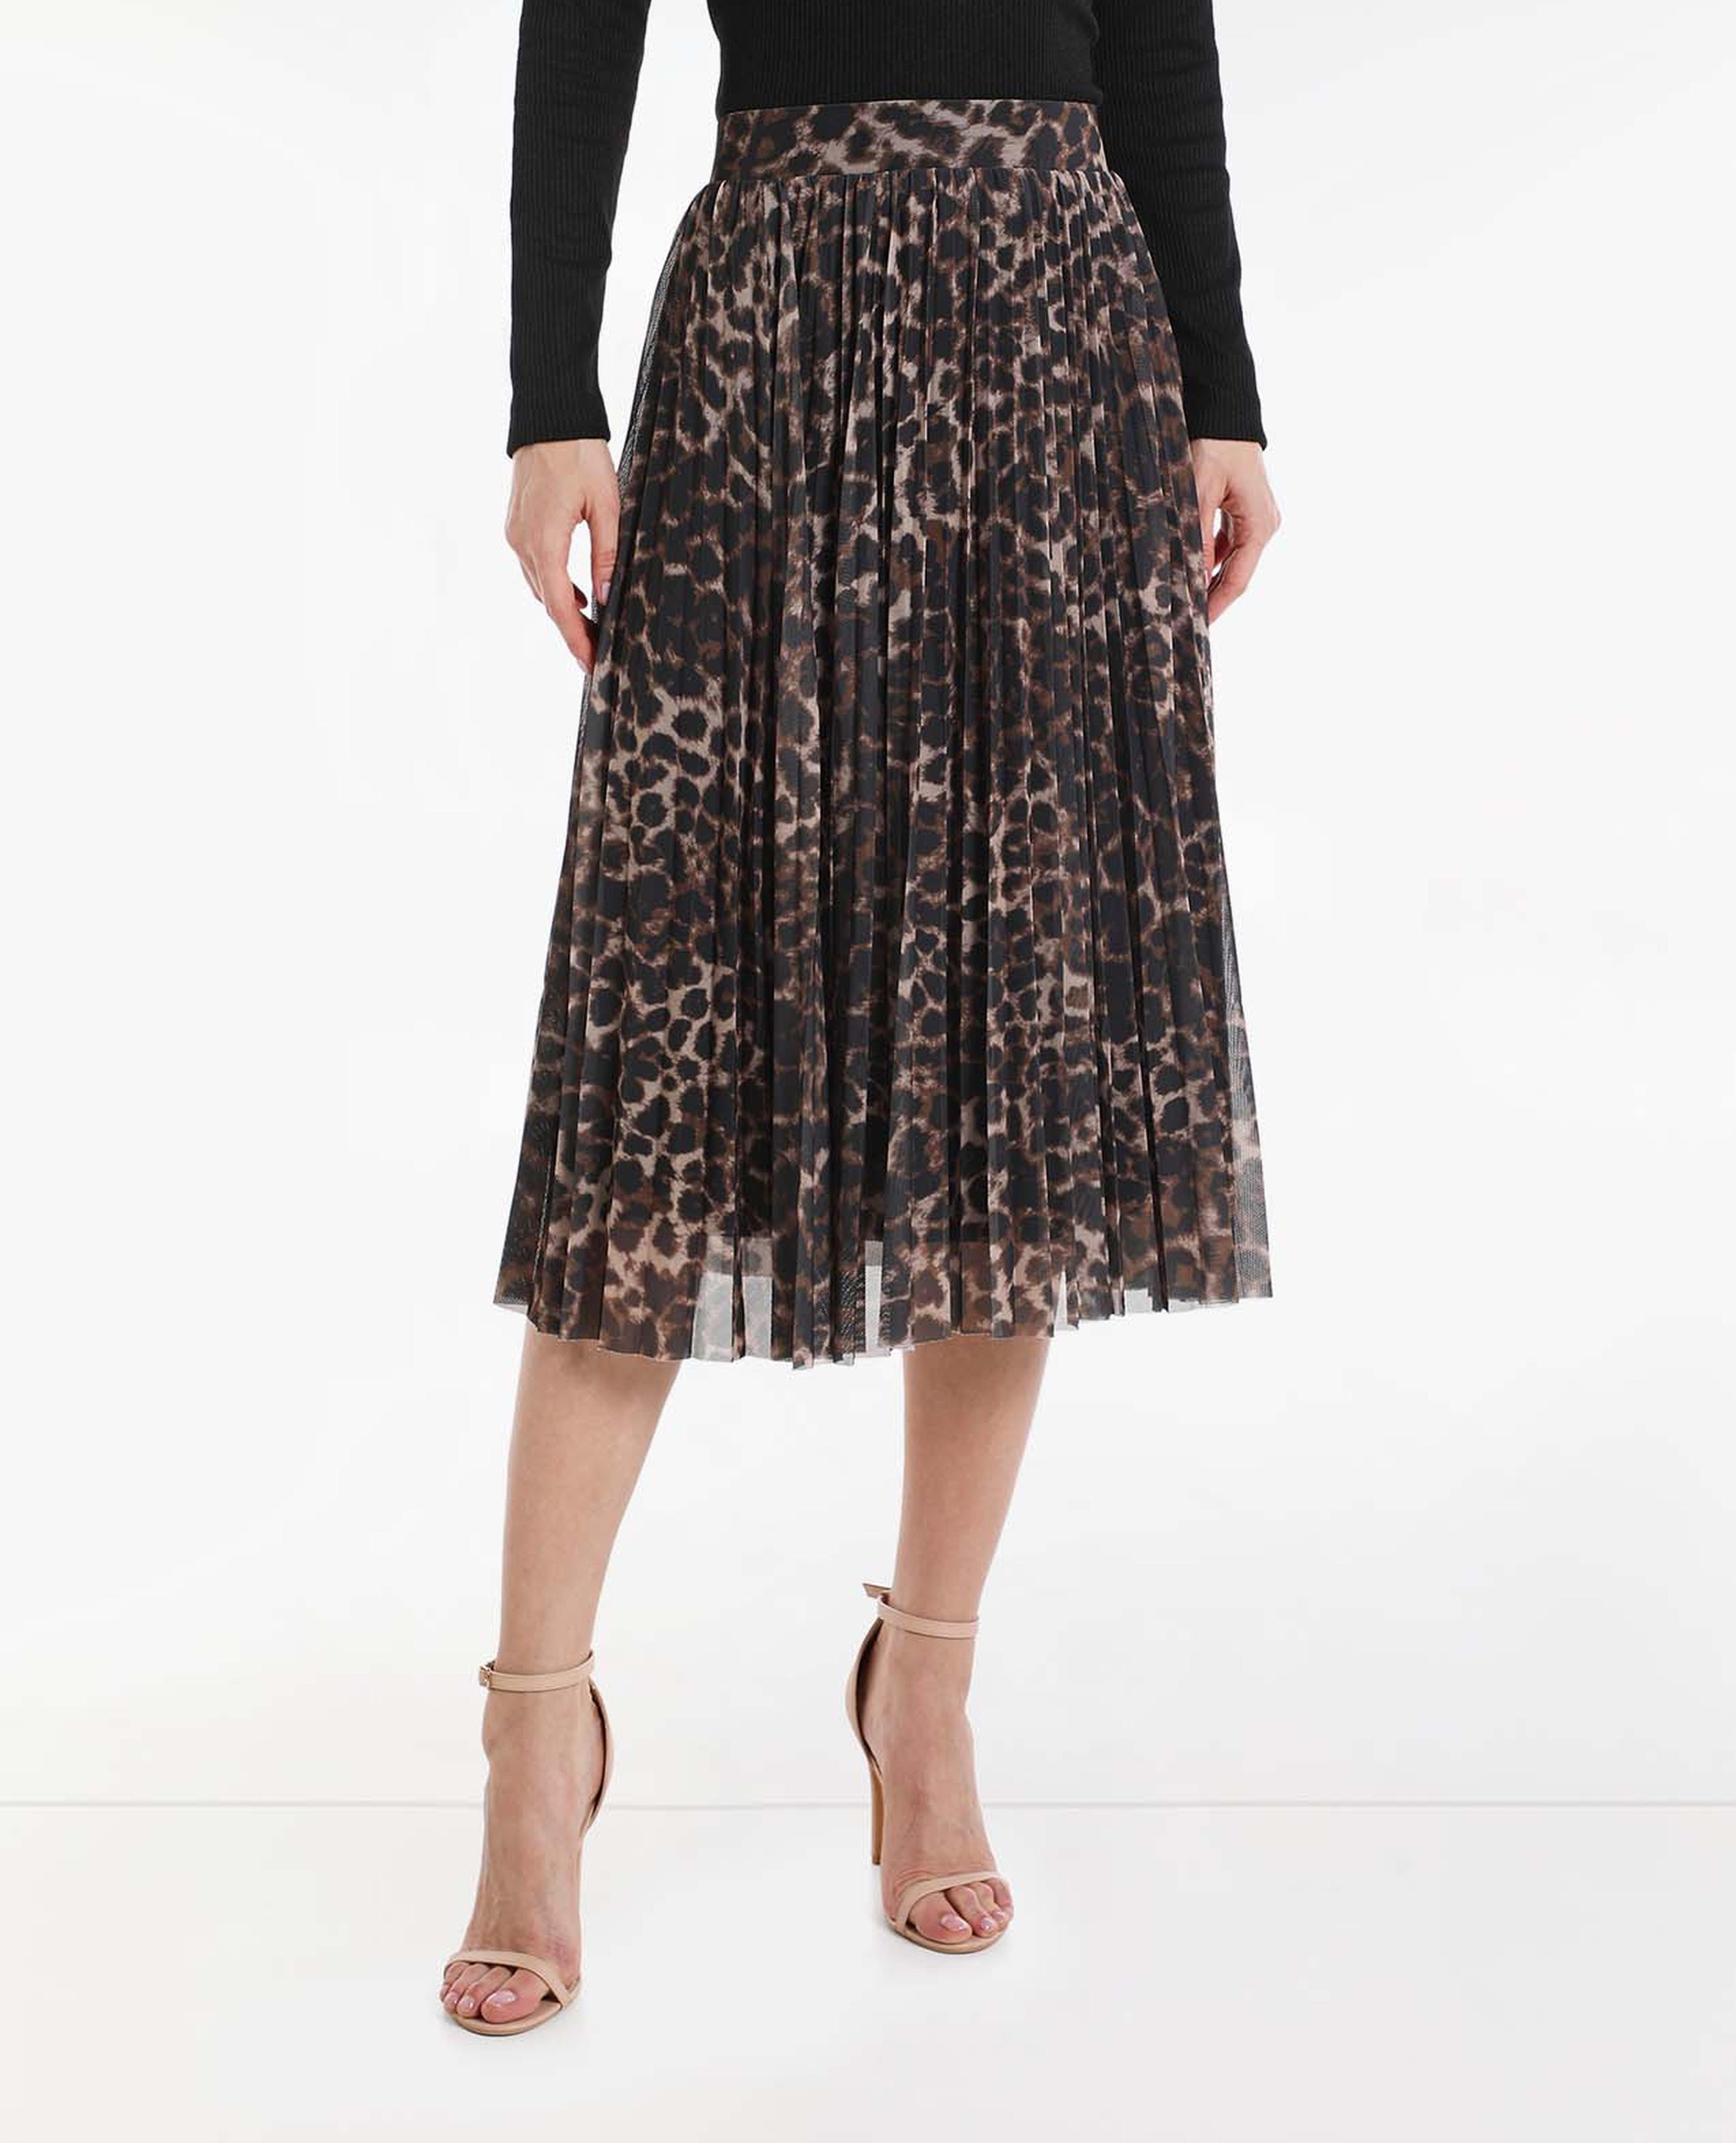 Leopard Printed Midi Skirt with Elasticated Waist